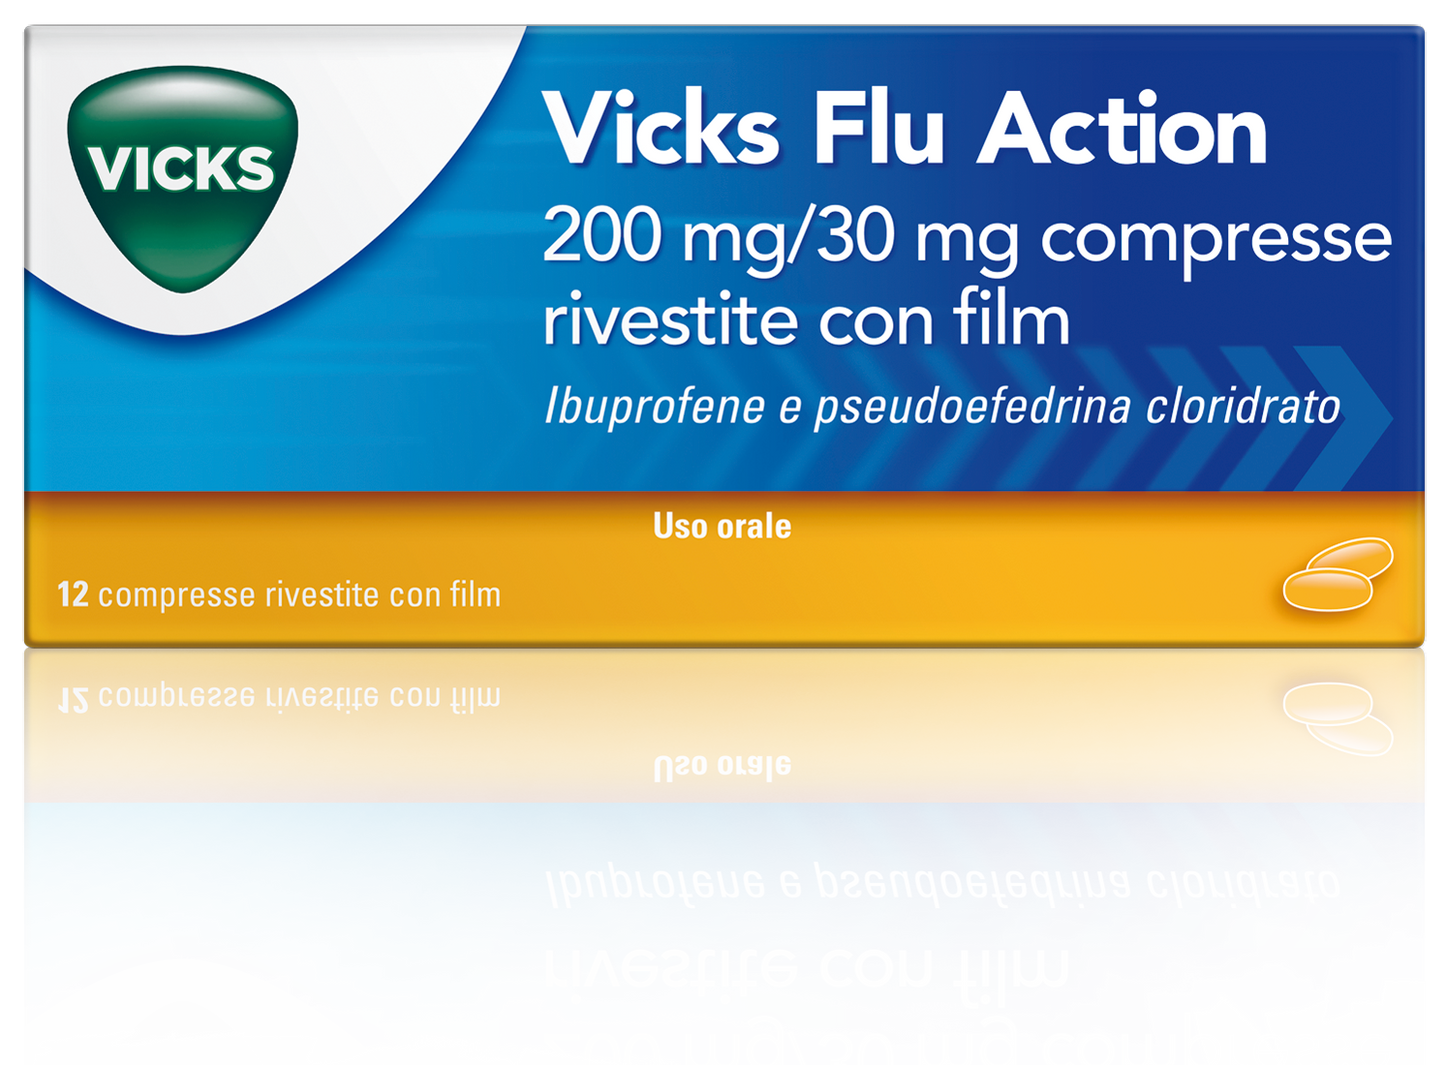 VICKS FLU ACTION 200 MG/30 MG COMPRESSE RIVESTITE CON FILM